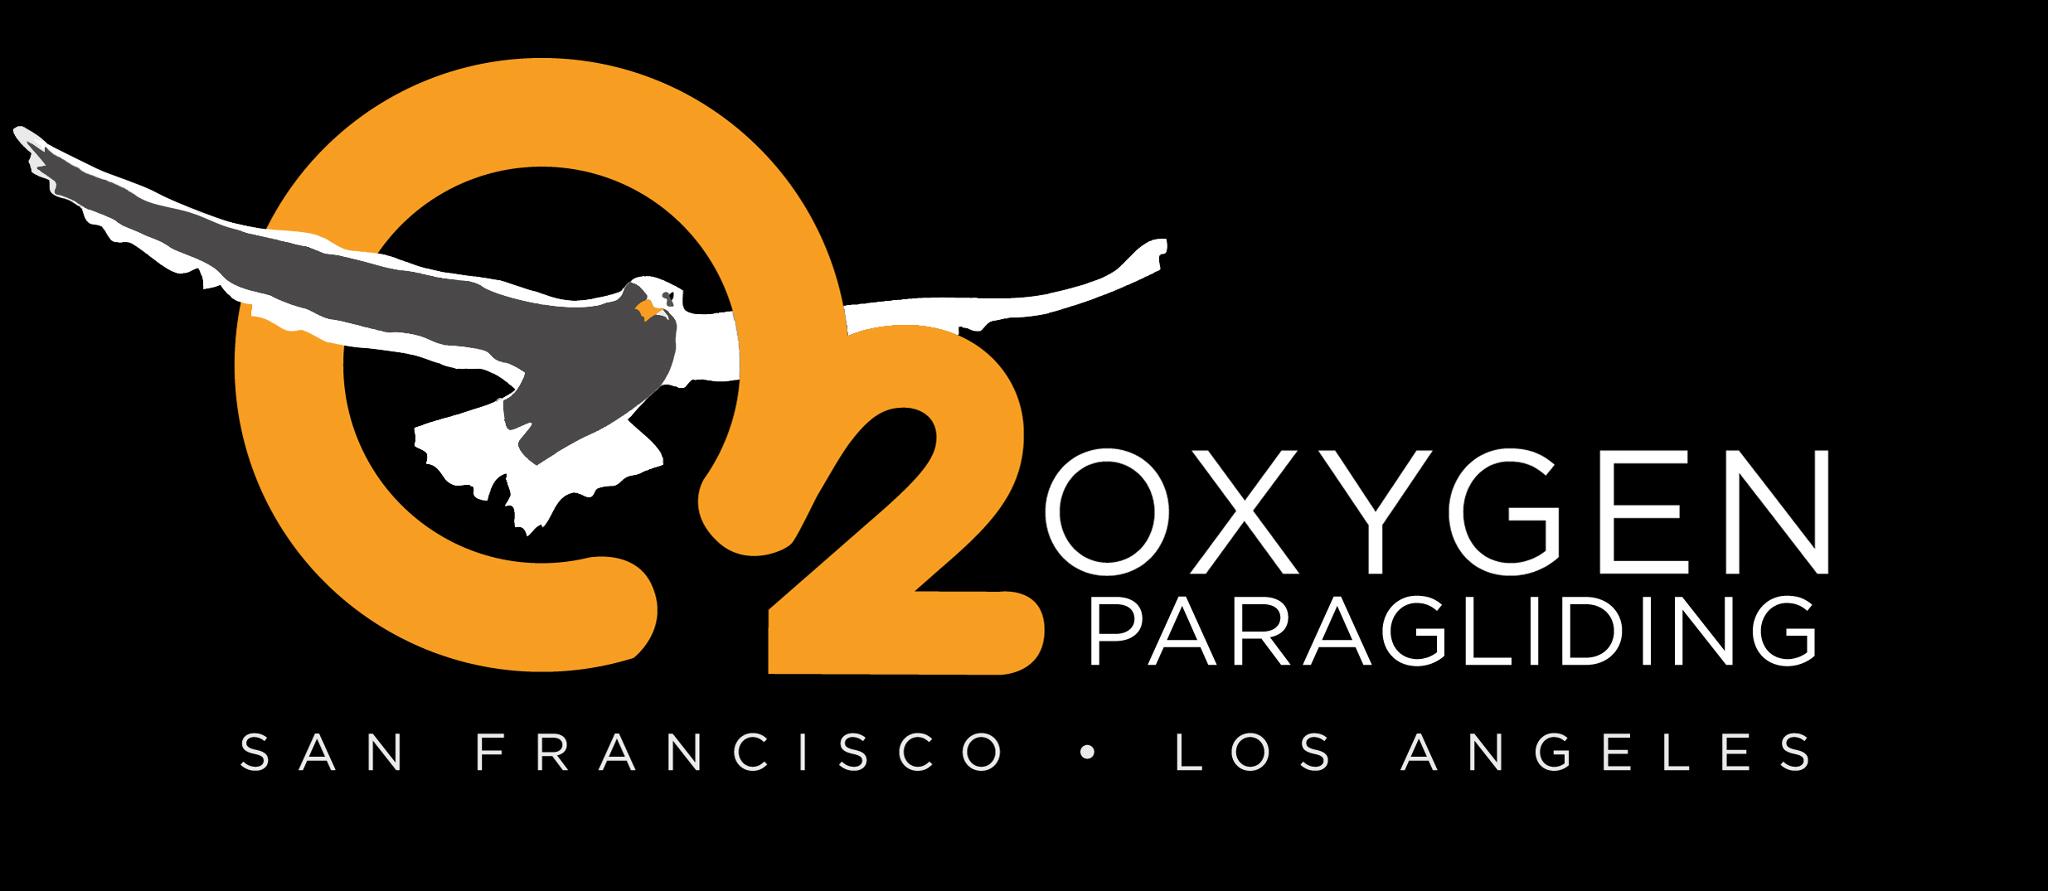 Los Angeles Paragliding - Oxygen Paragliding